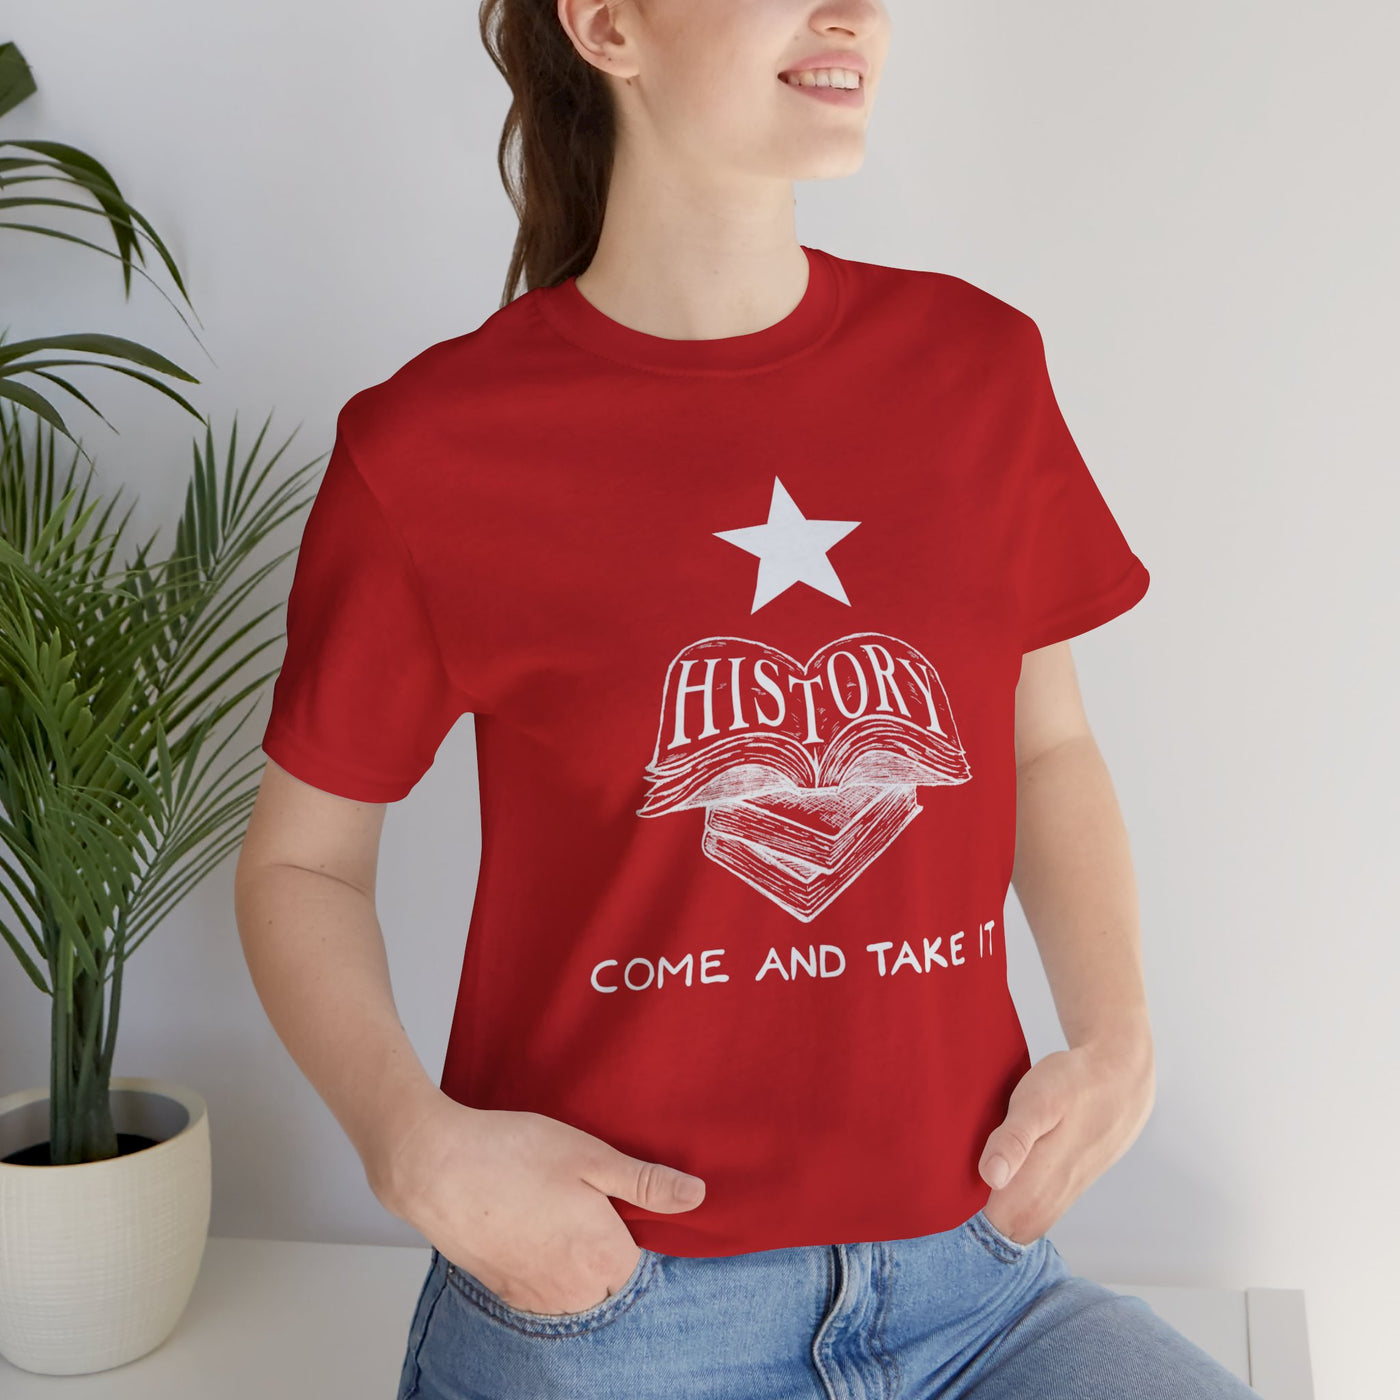 History: Come & Take It! Shirt